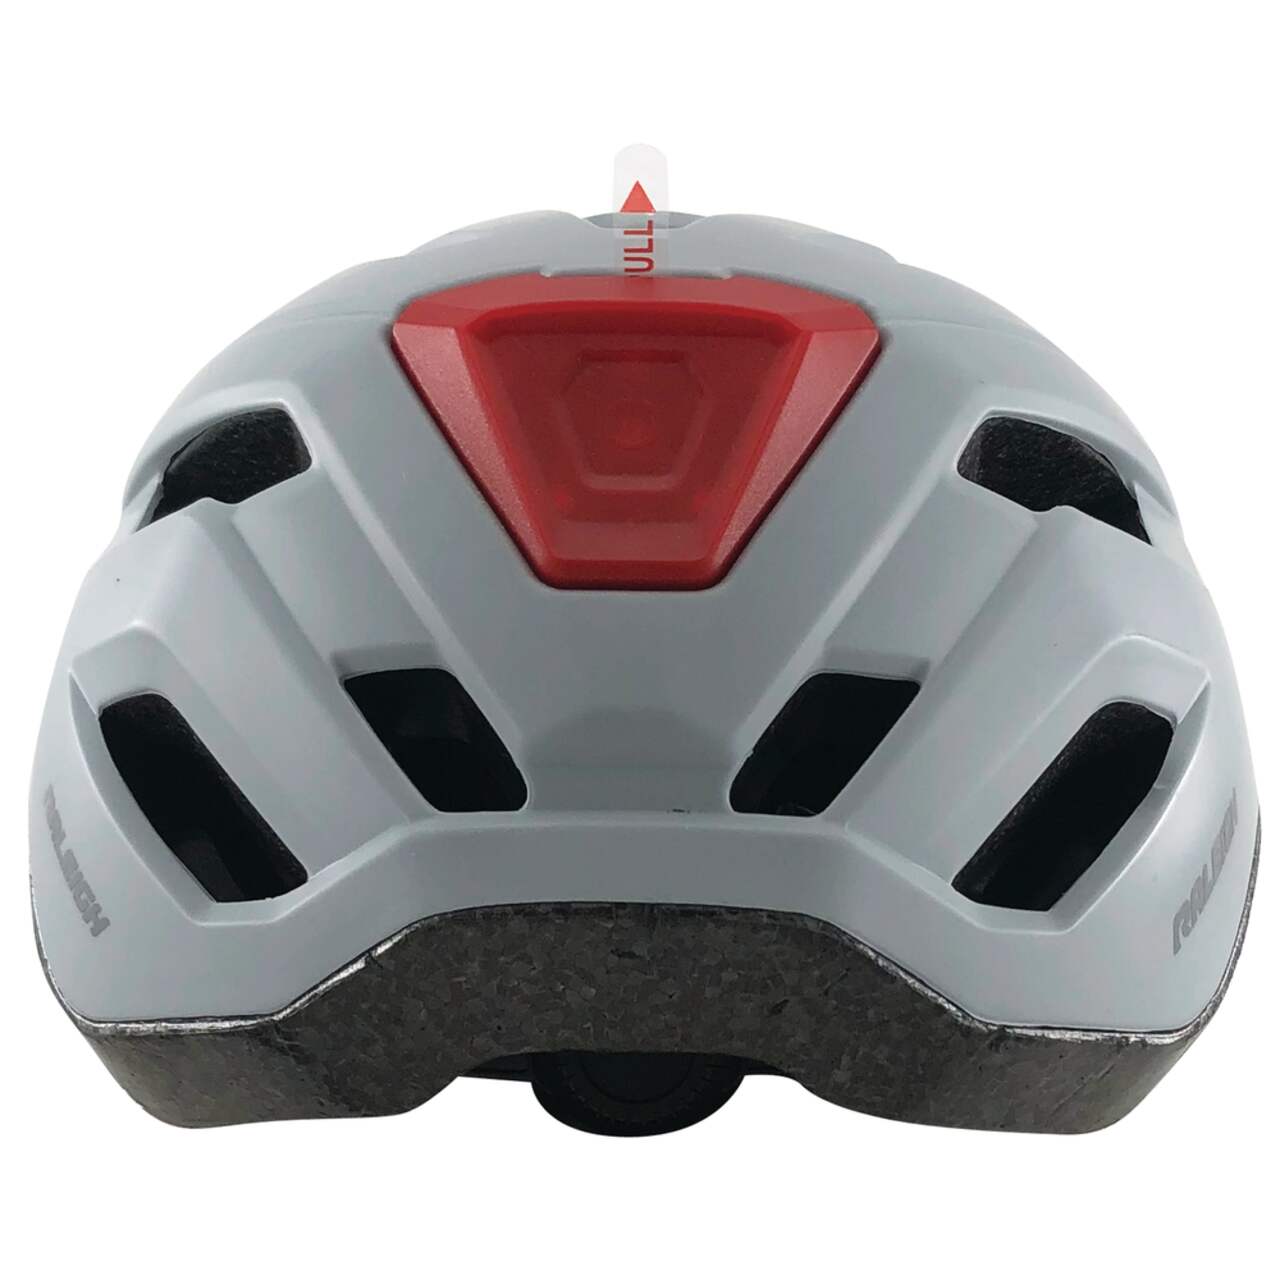 Paw Patrol Multi-Sport Kids' Bike Helmet w/Adjustable Straps, Blue/Red,  Ages 5+